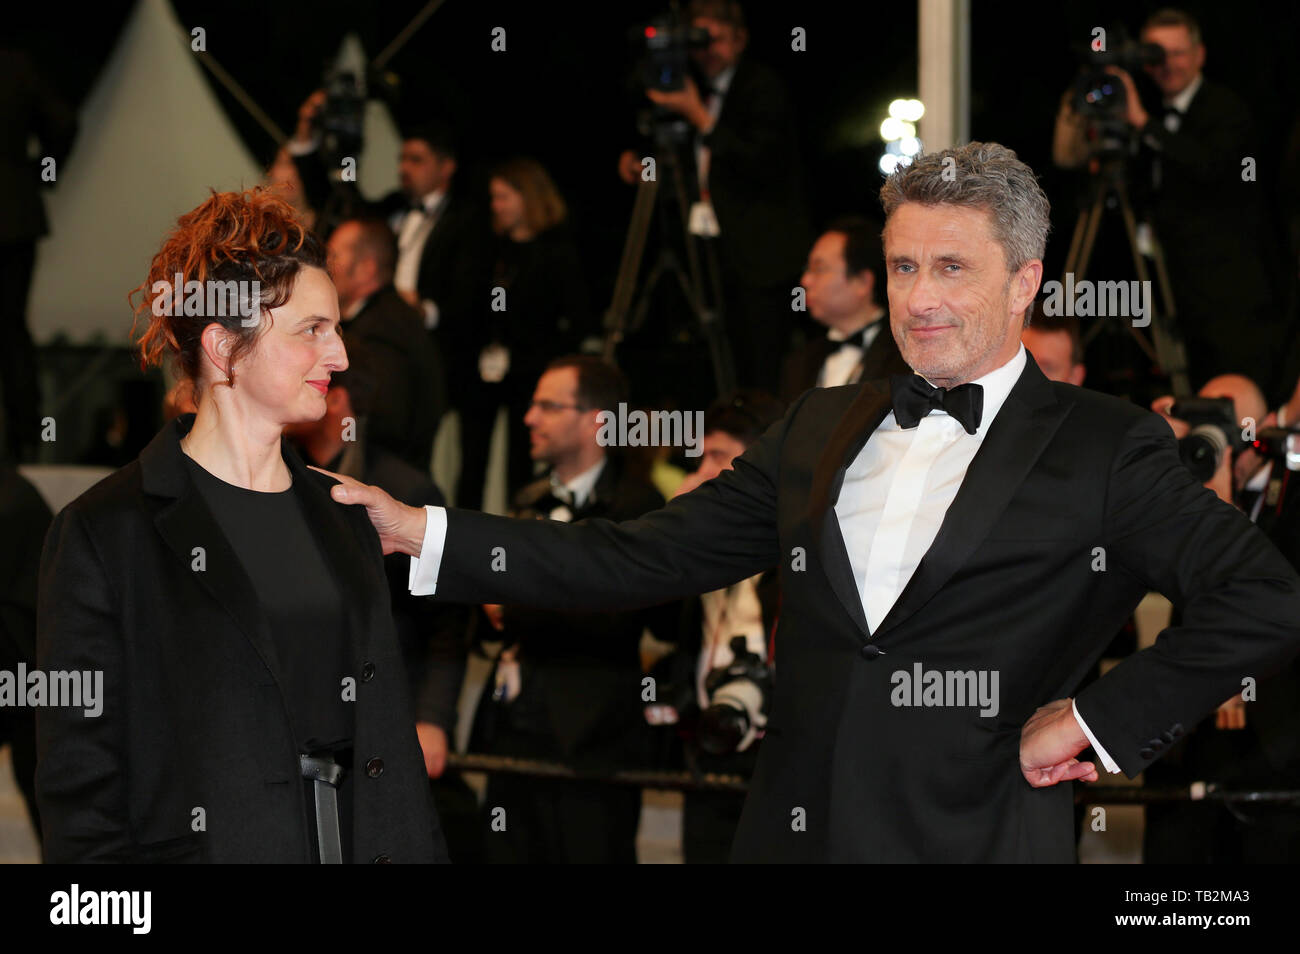 Festival de Cine de Cannes 2019 - Alice Rohrwacher y Paweł Pawlikowski asisten a la proyección de Sorry we missed you Foto de stock